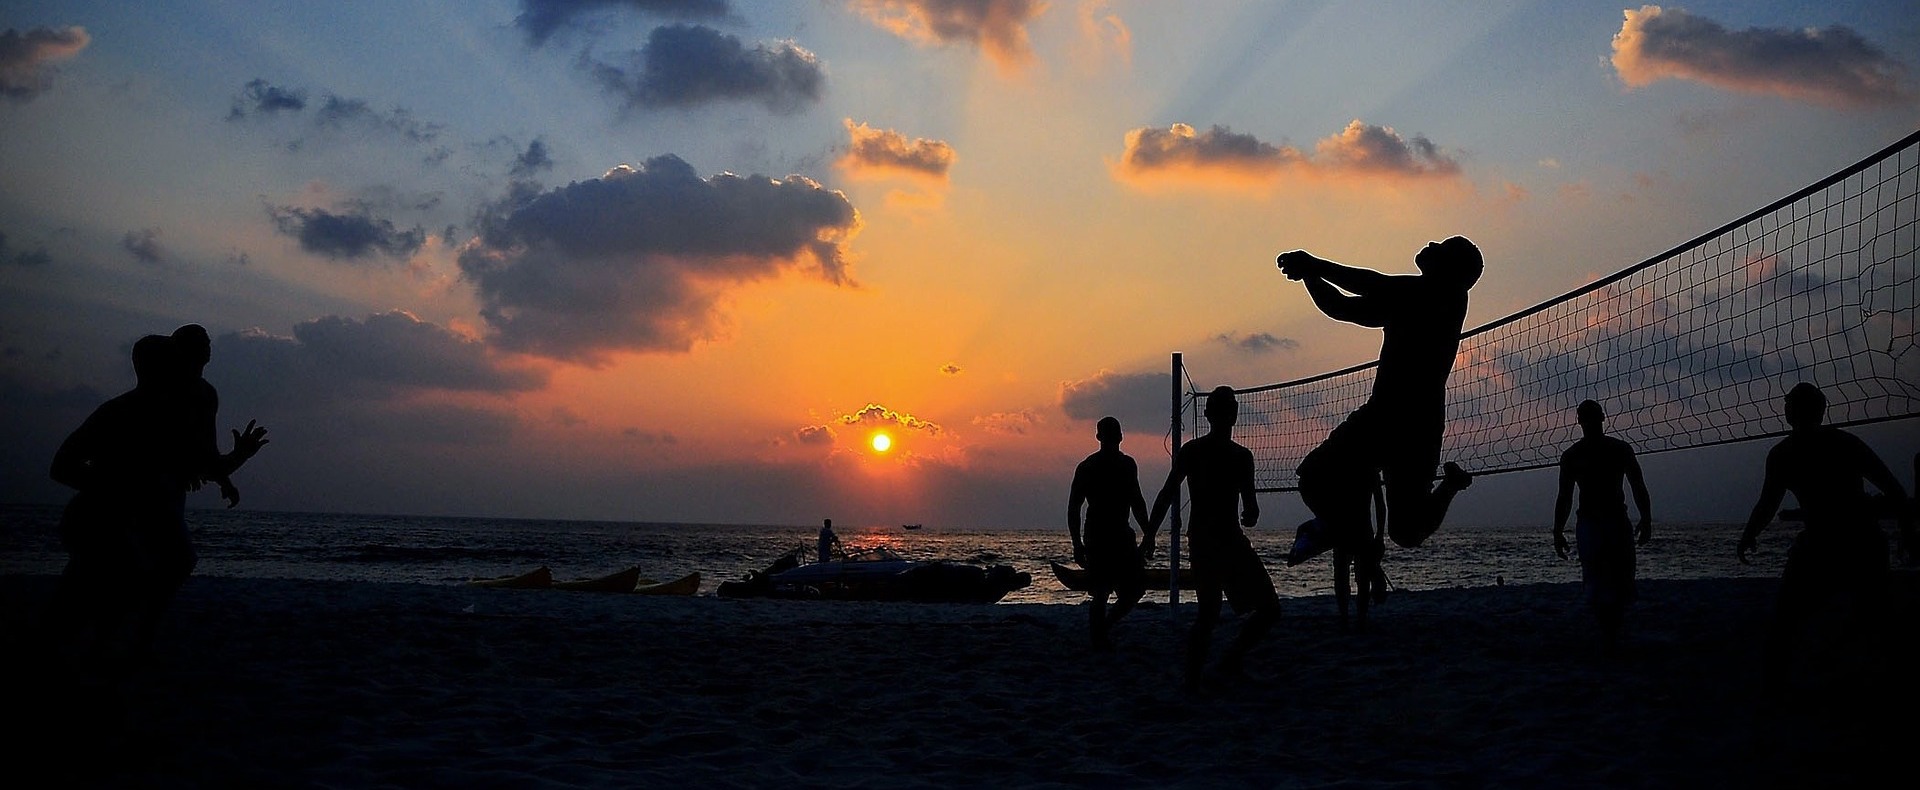 Beach volleyball at sunset